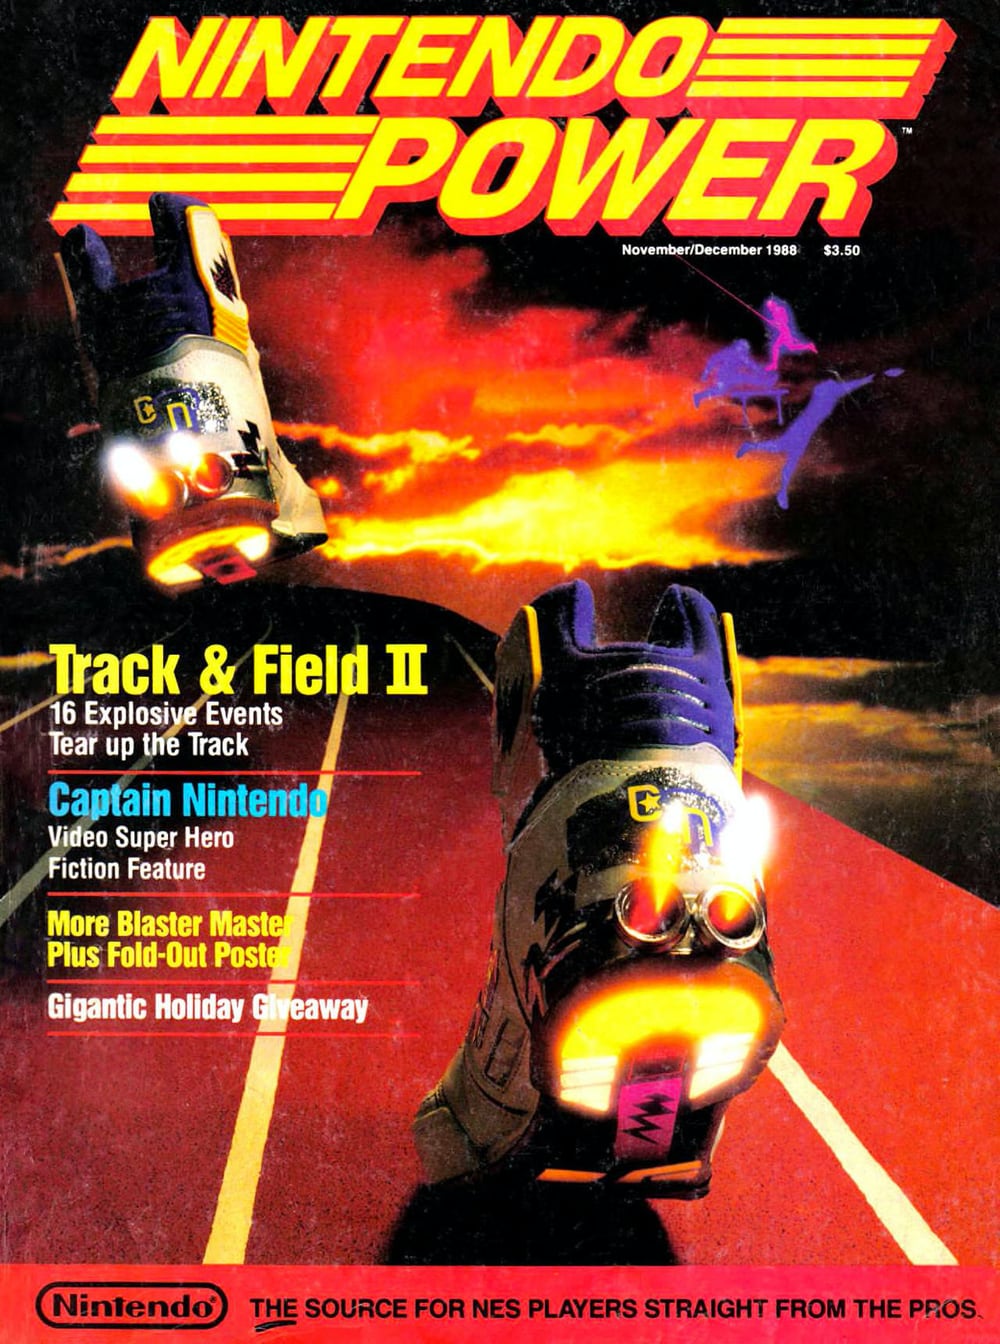 Nintendo Power November/December 1988 cover